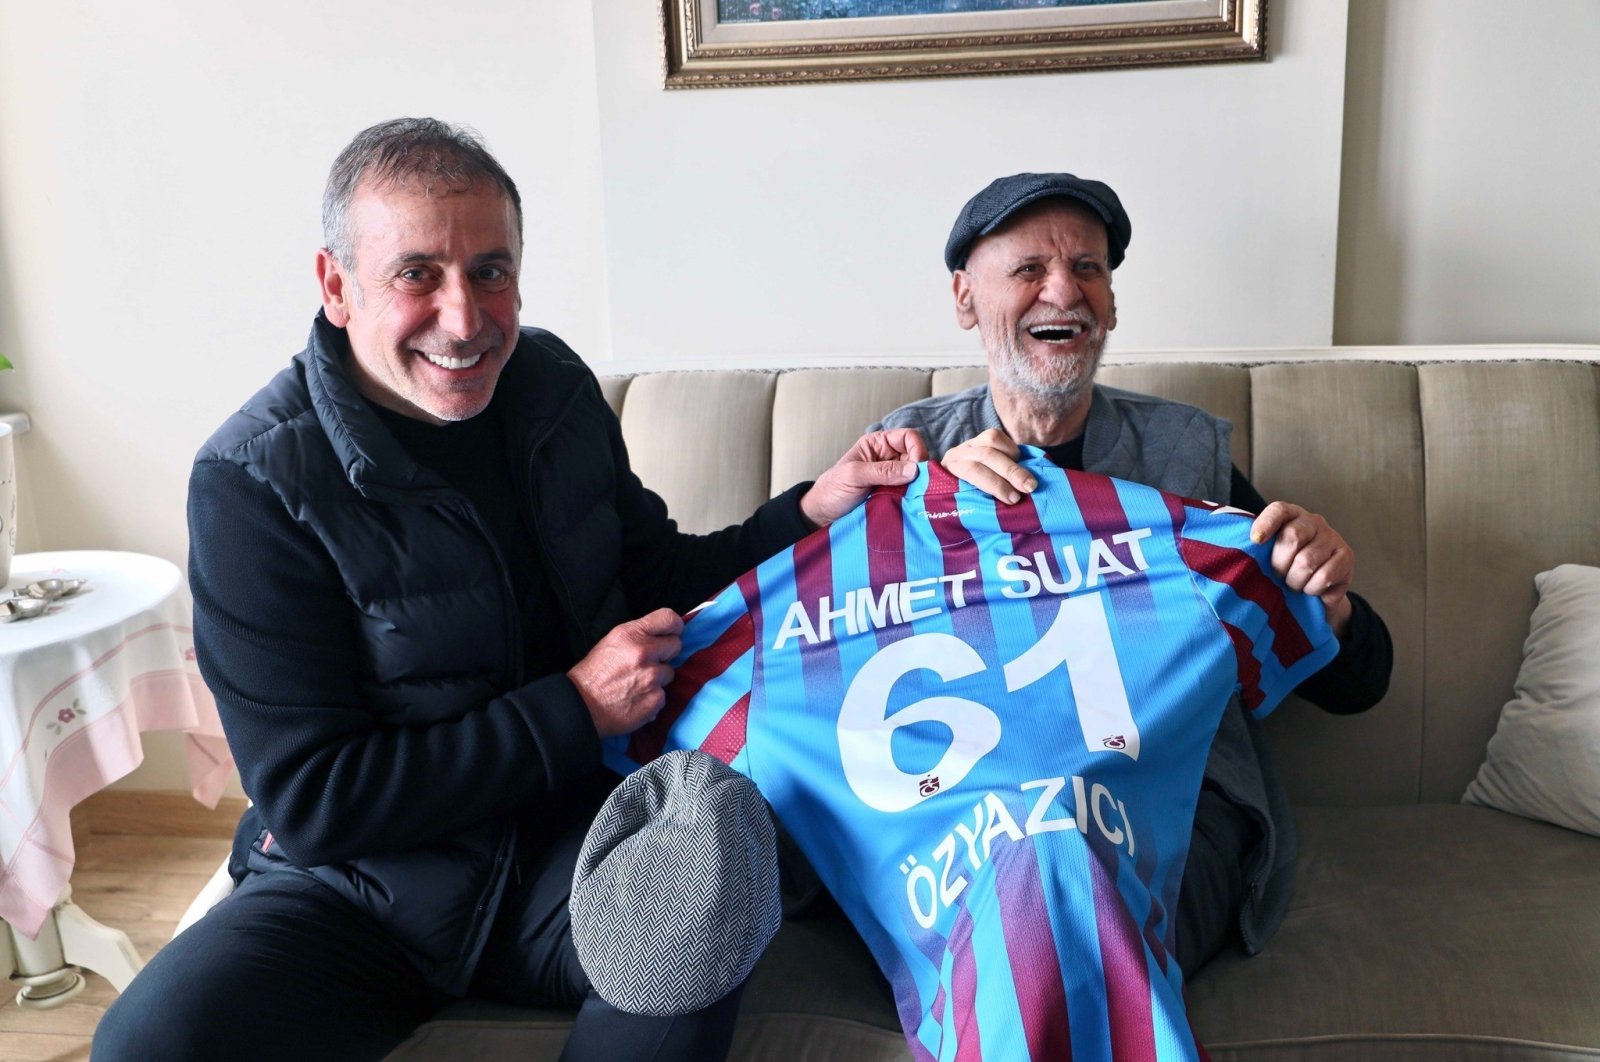 A file photo of Trabzonspor coach Abdullah Avcı handing over a jersey to former coach Ahmet Suat Özyazıcı, Istanbul, Türkiye, April 20, 2022. (IHA Photo)